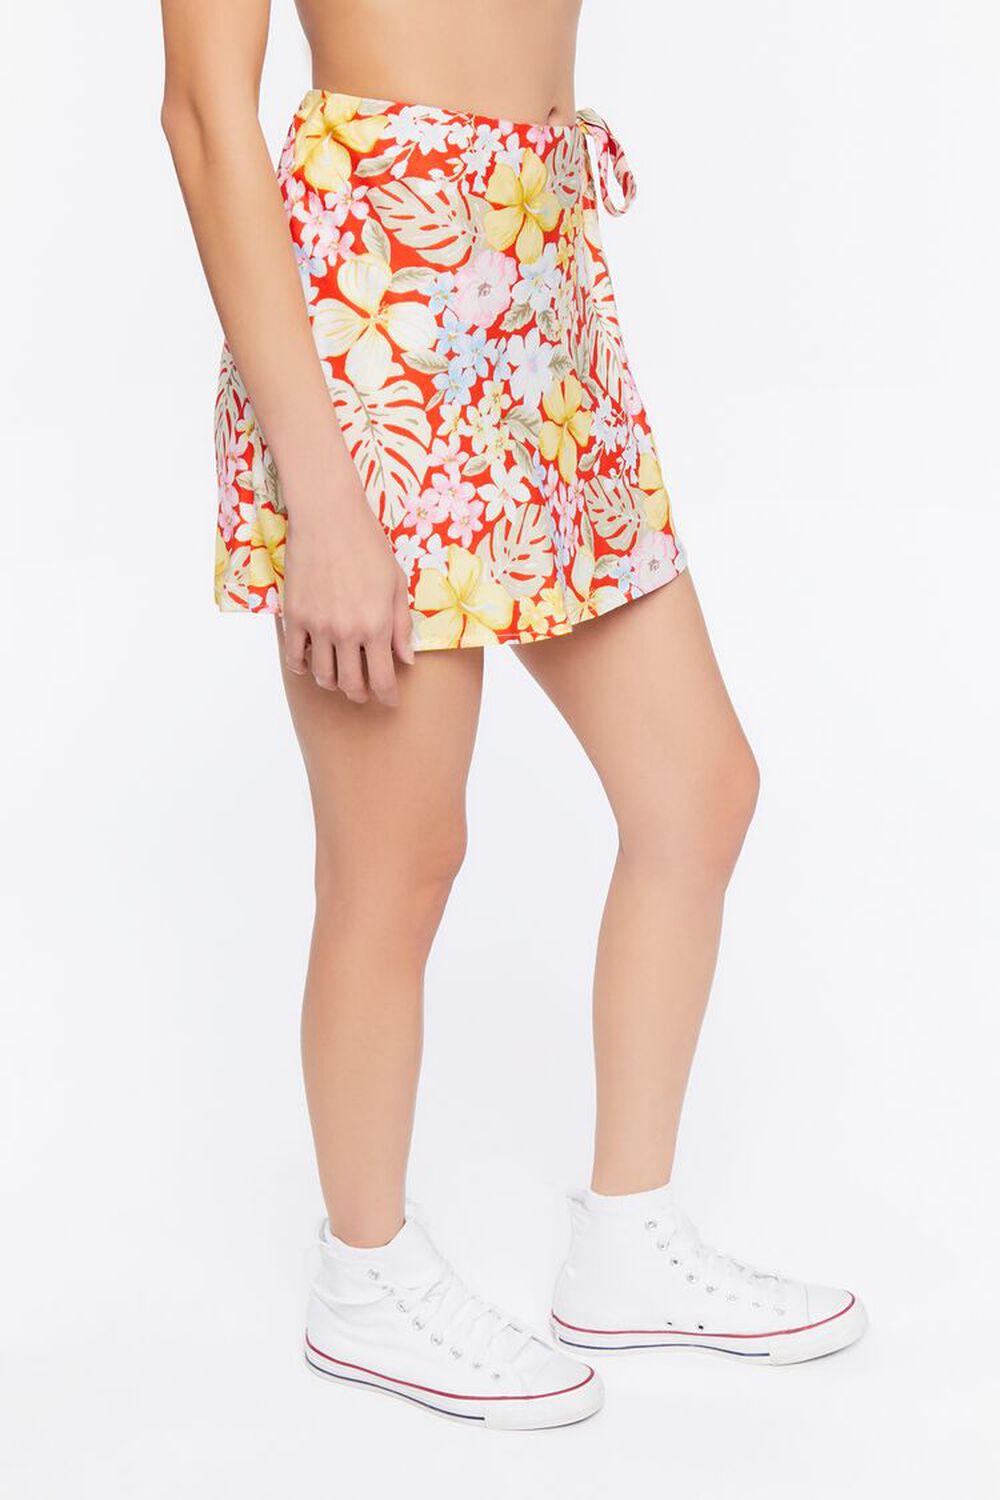 Tropical Floral Print Wrap Mini Skirt, image 3